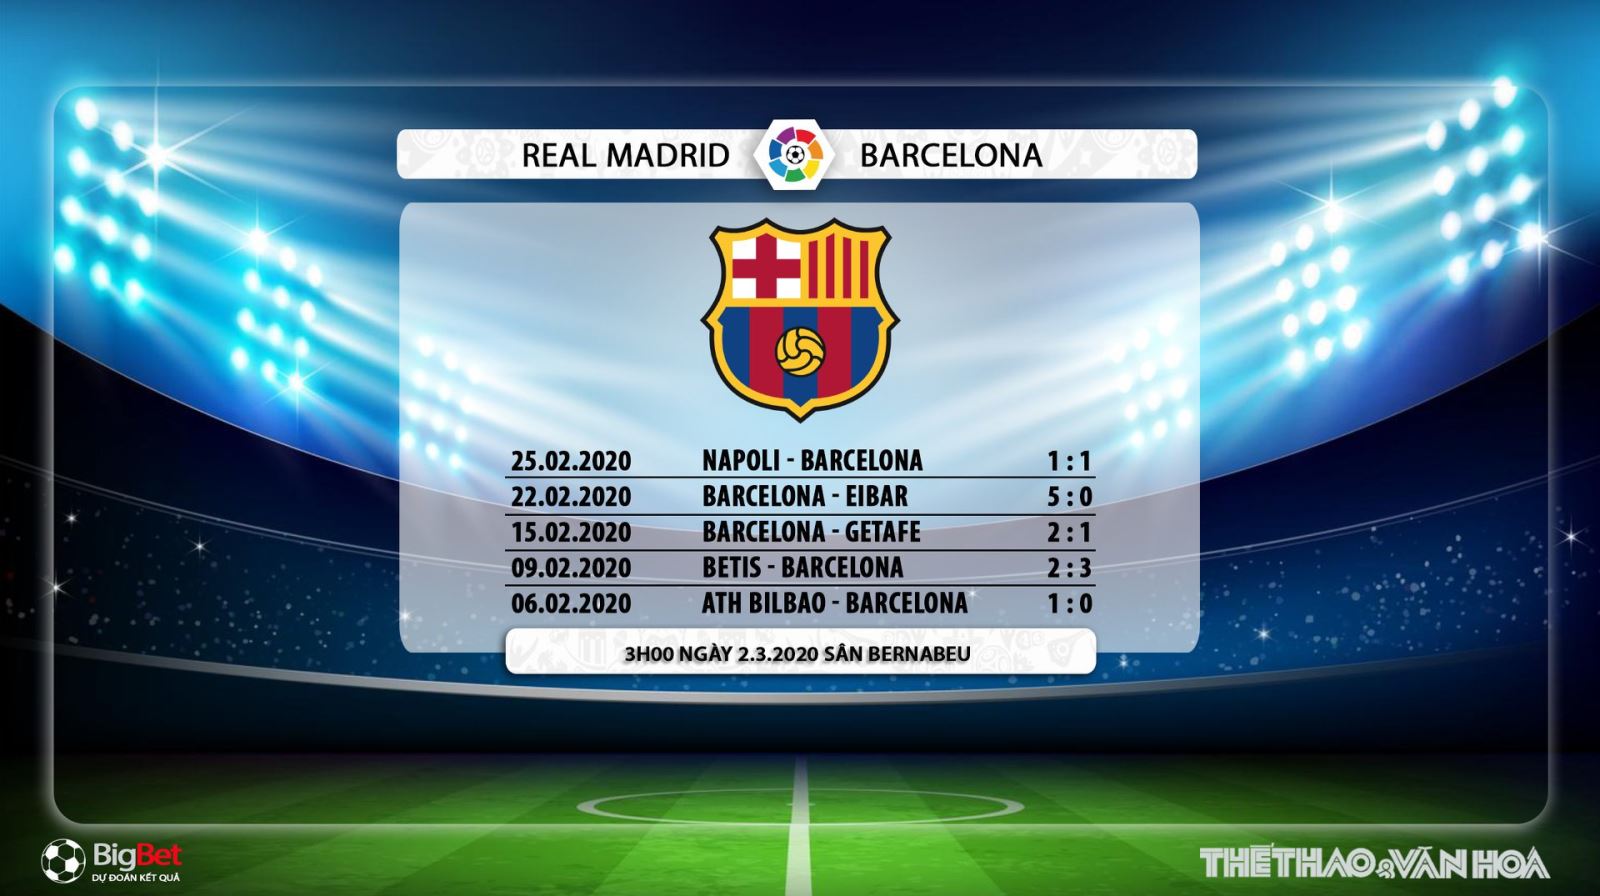 Real Madrid vs Barcelona, Real Madrid, Barca, Barcelona, nhận định Real Madrid vs Barcelona, kinh dien, trực tiếp Real Madrid vs Barcelona, soi kèo Real Madrid vs Barcelona, BĐTV, SSPORT